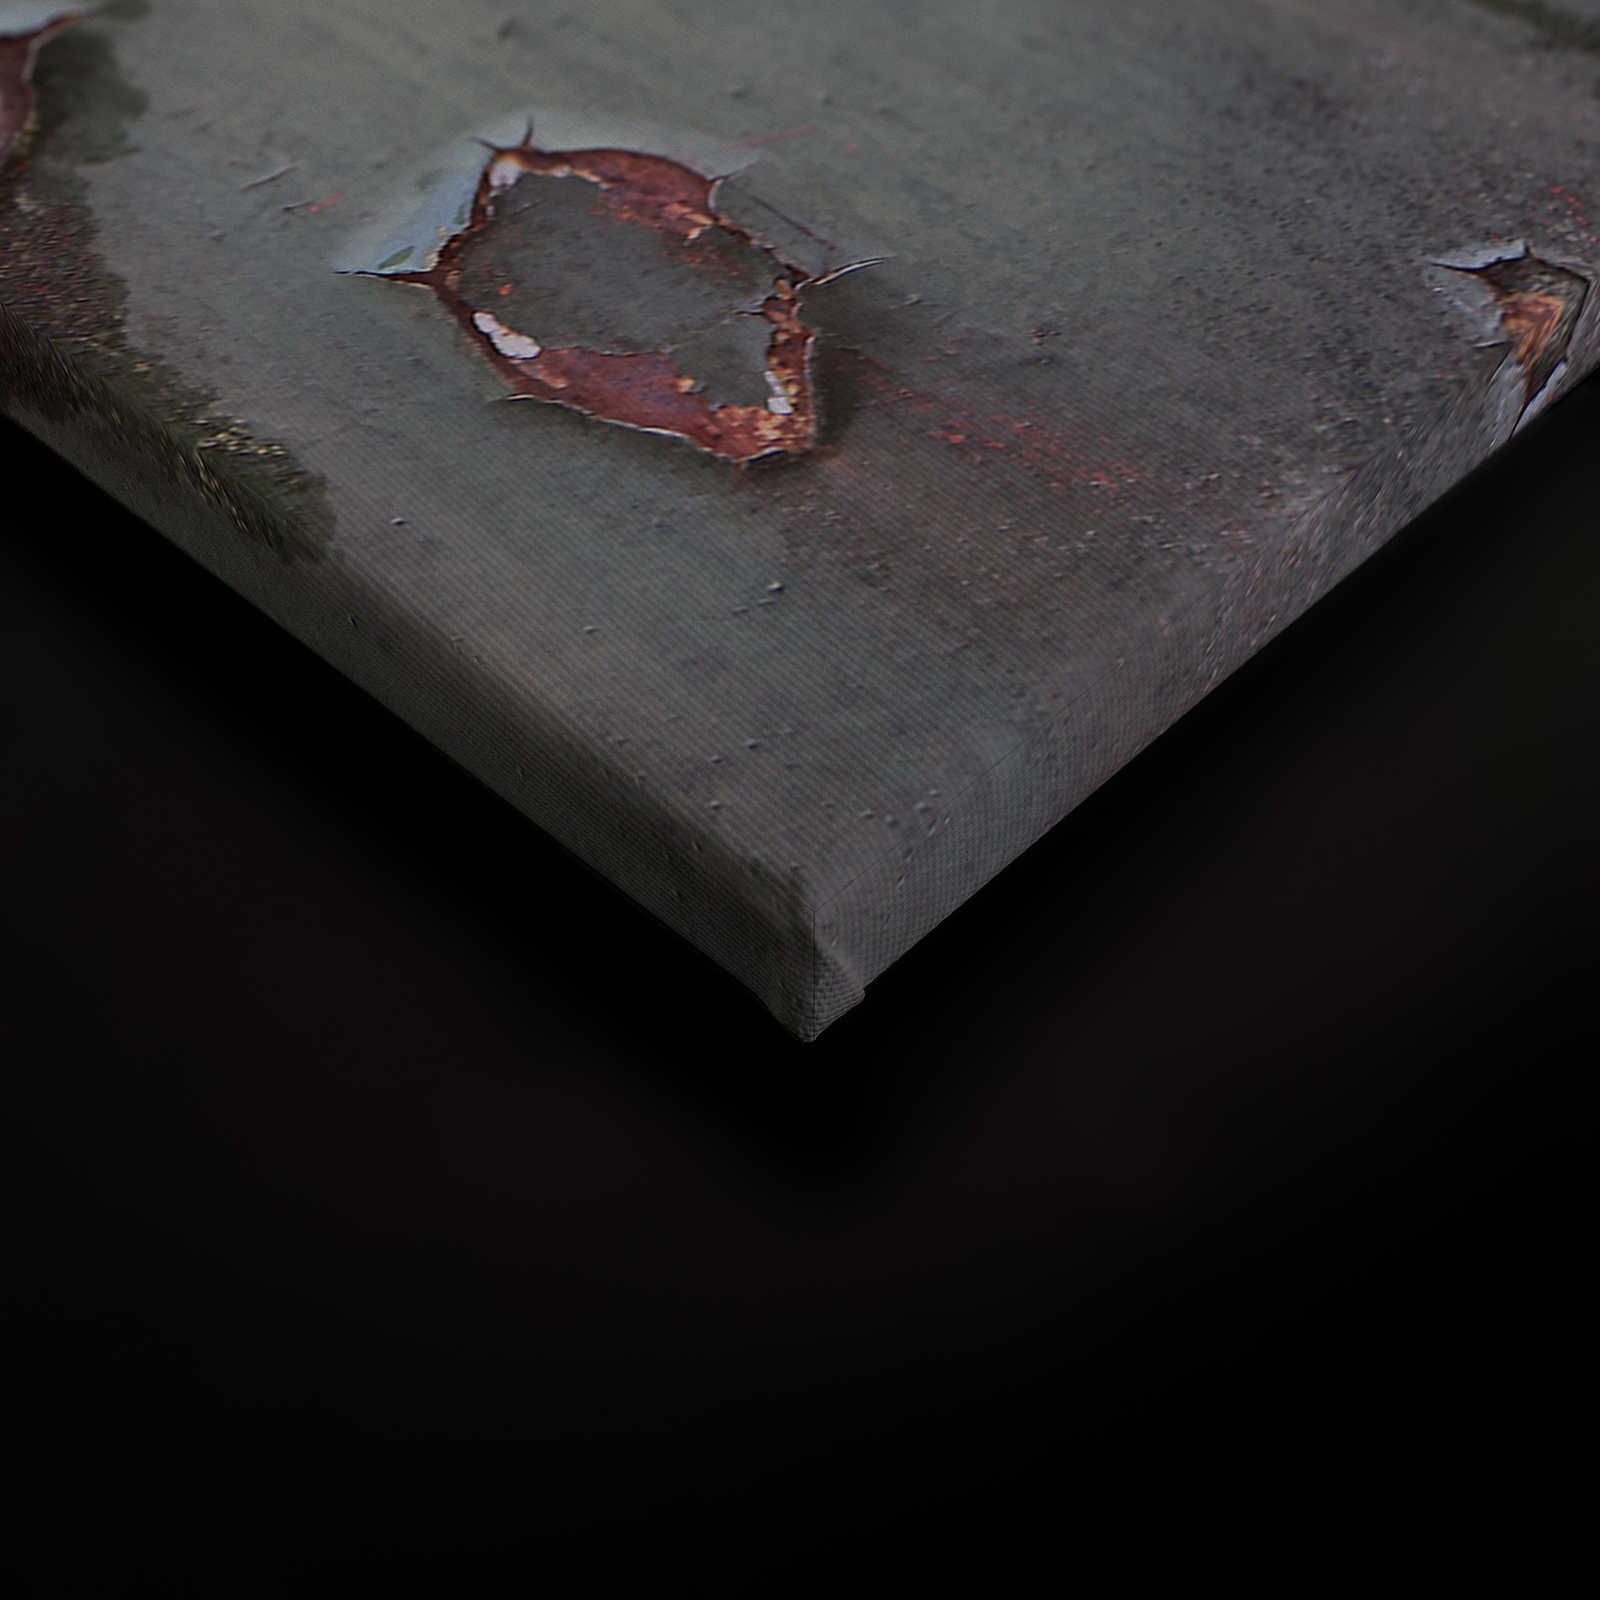             Metallwand - Leinwandbild Industrial mit Rost & Used Look – 0,90 m x 0,60 m
        